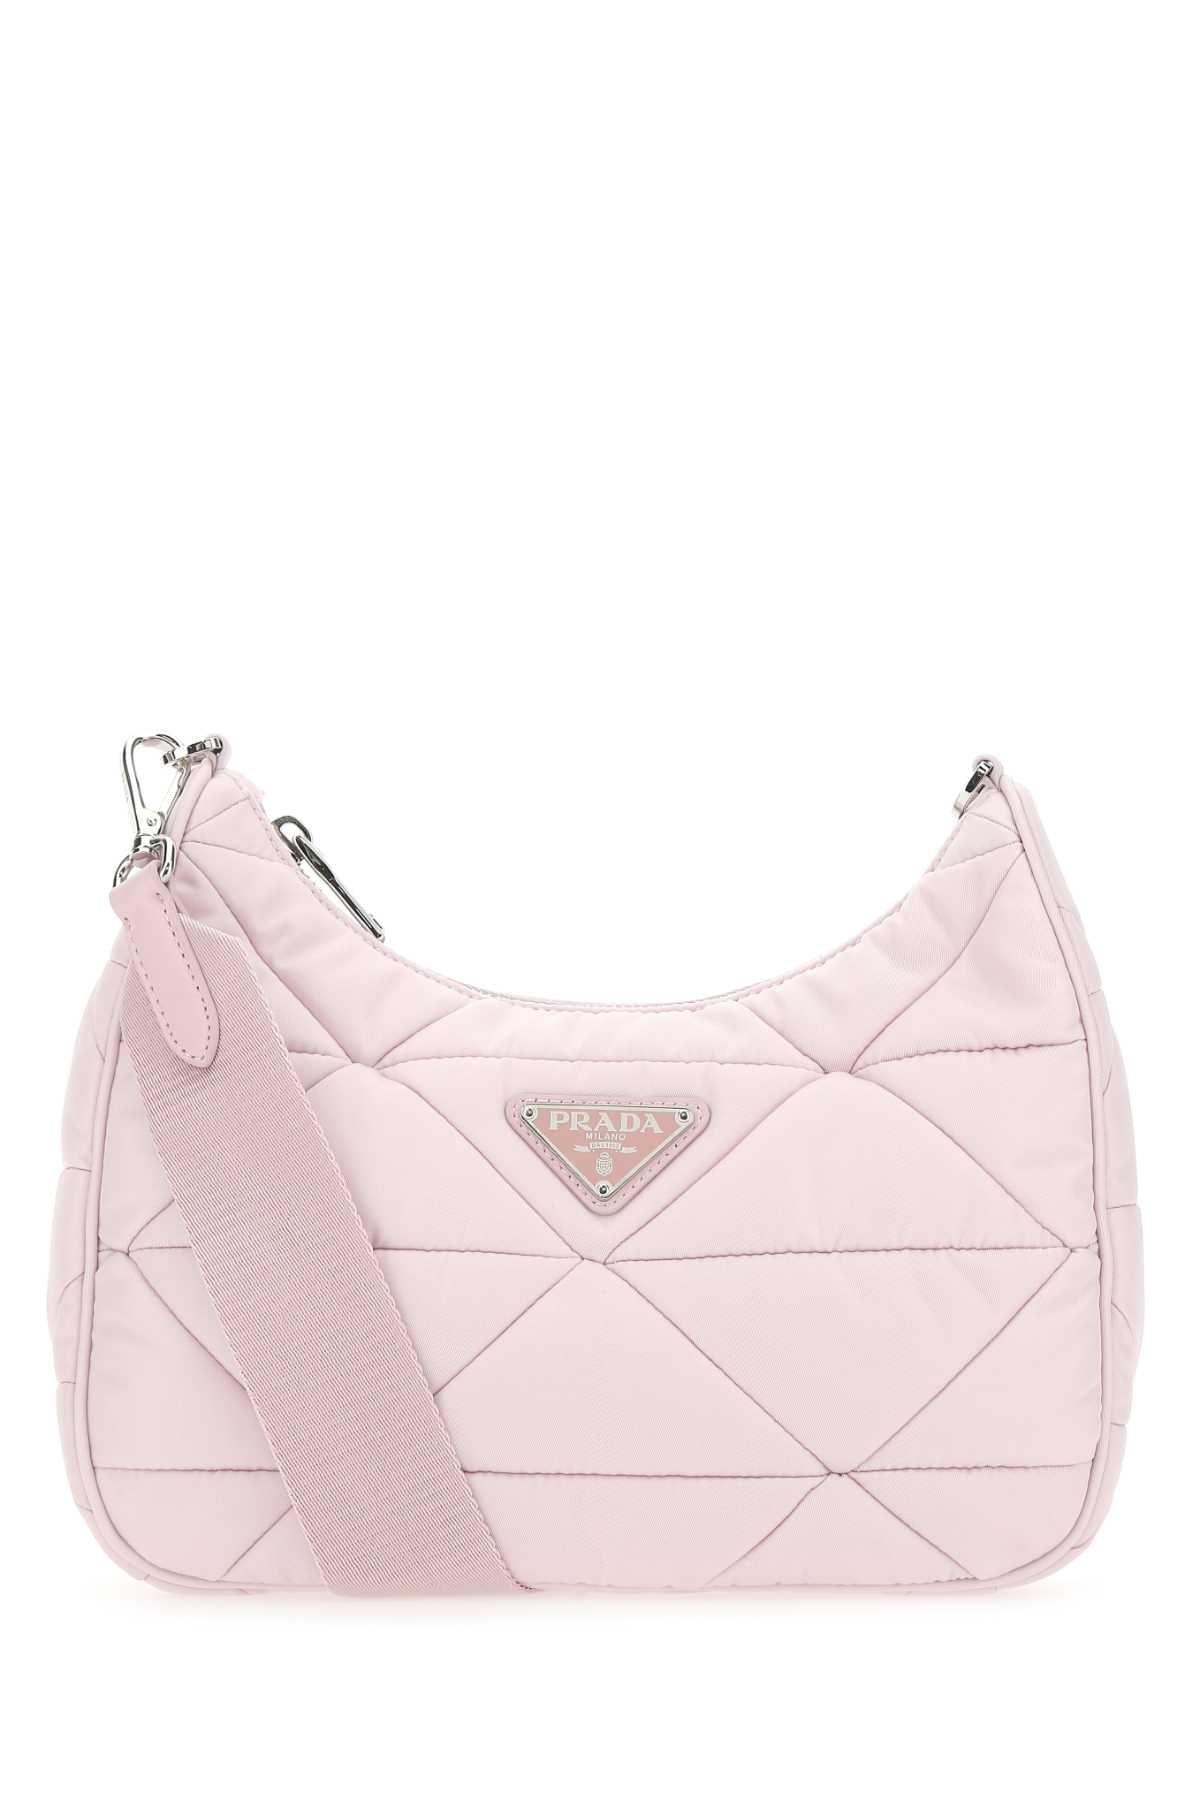 prada nylon shoulder bag pink｜TikTok Search